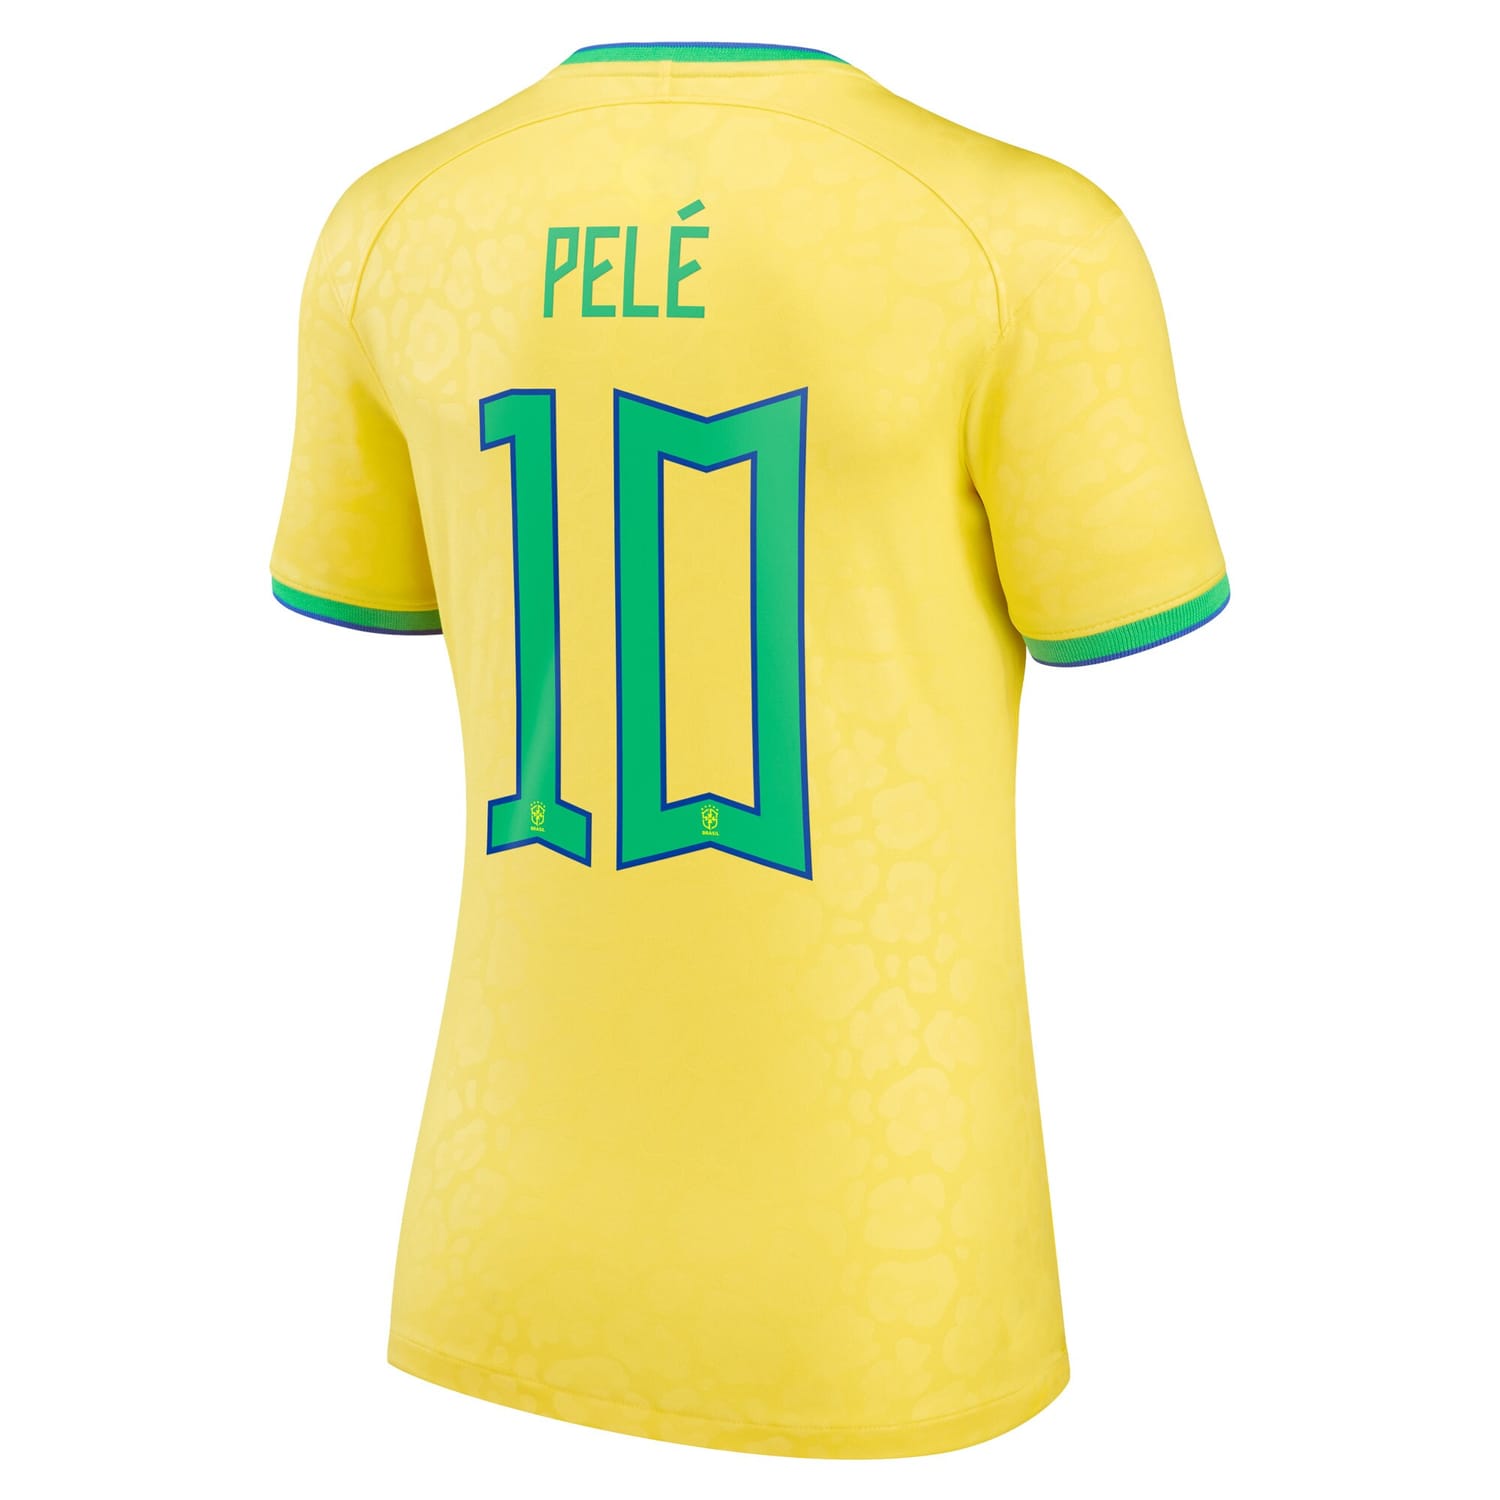 Brazil National Team Home Jersey Shirt Yellow 2022-23 player Pele printing for Women